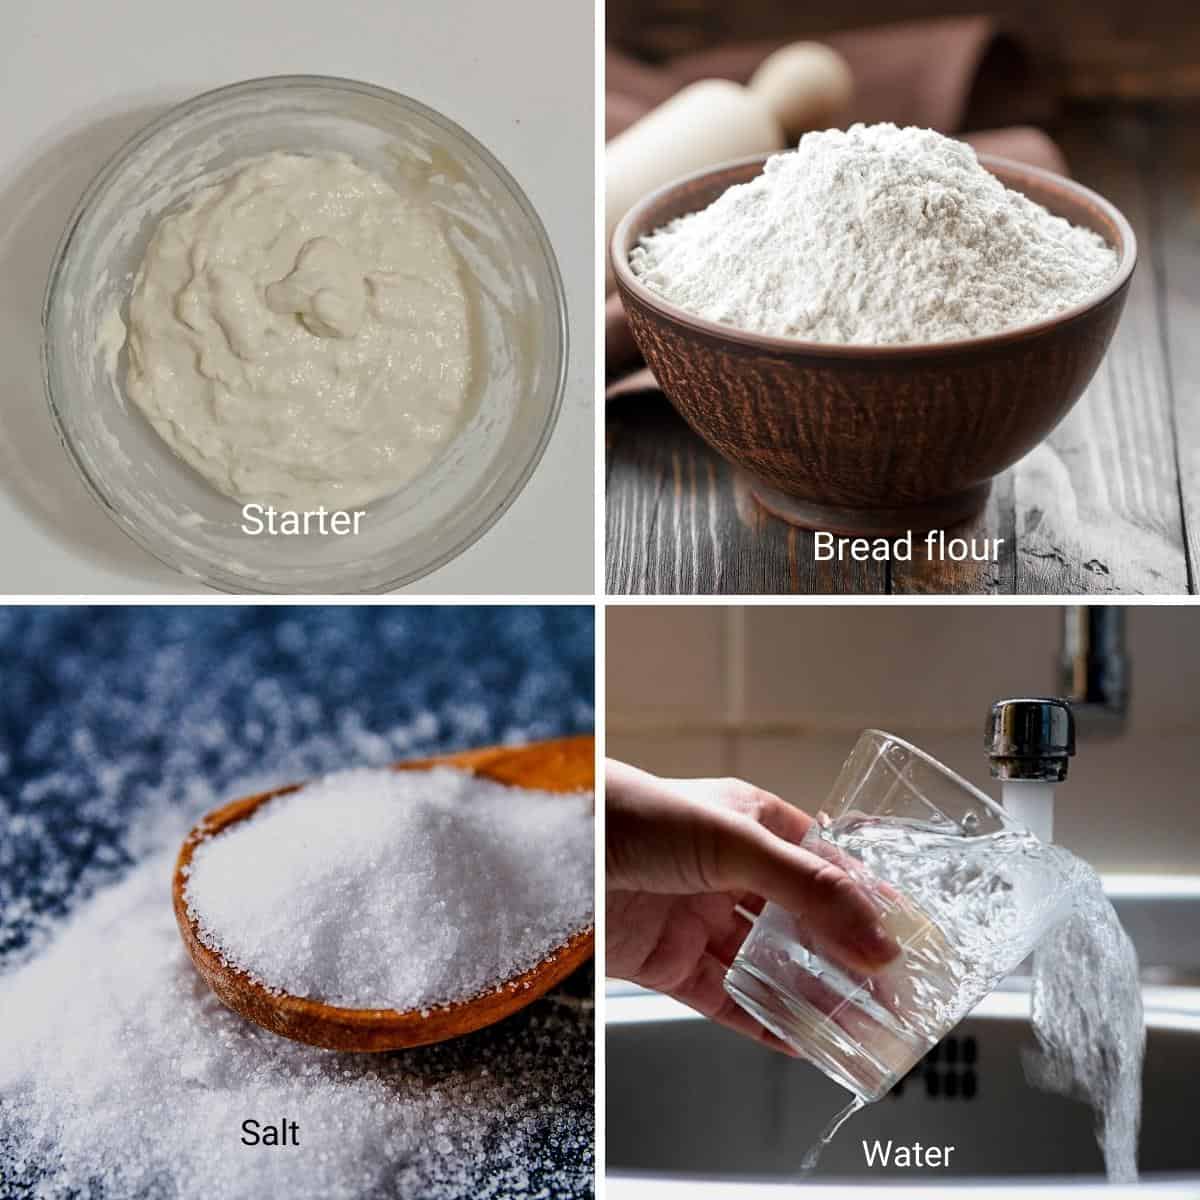 Ingredients for making sourdough bread.